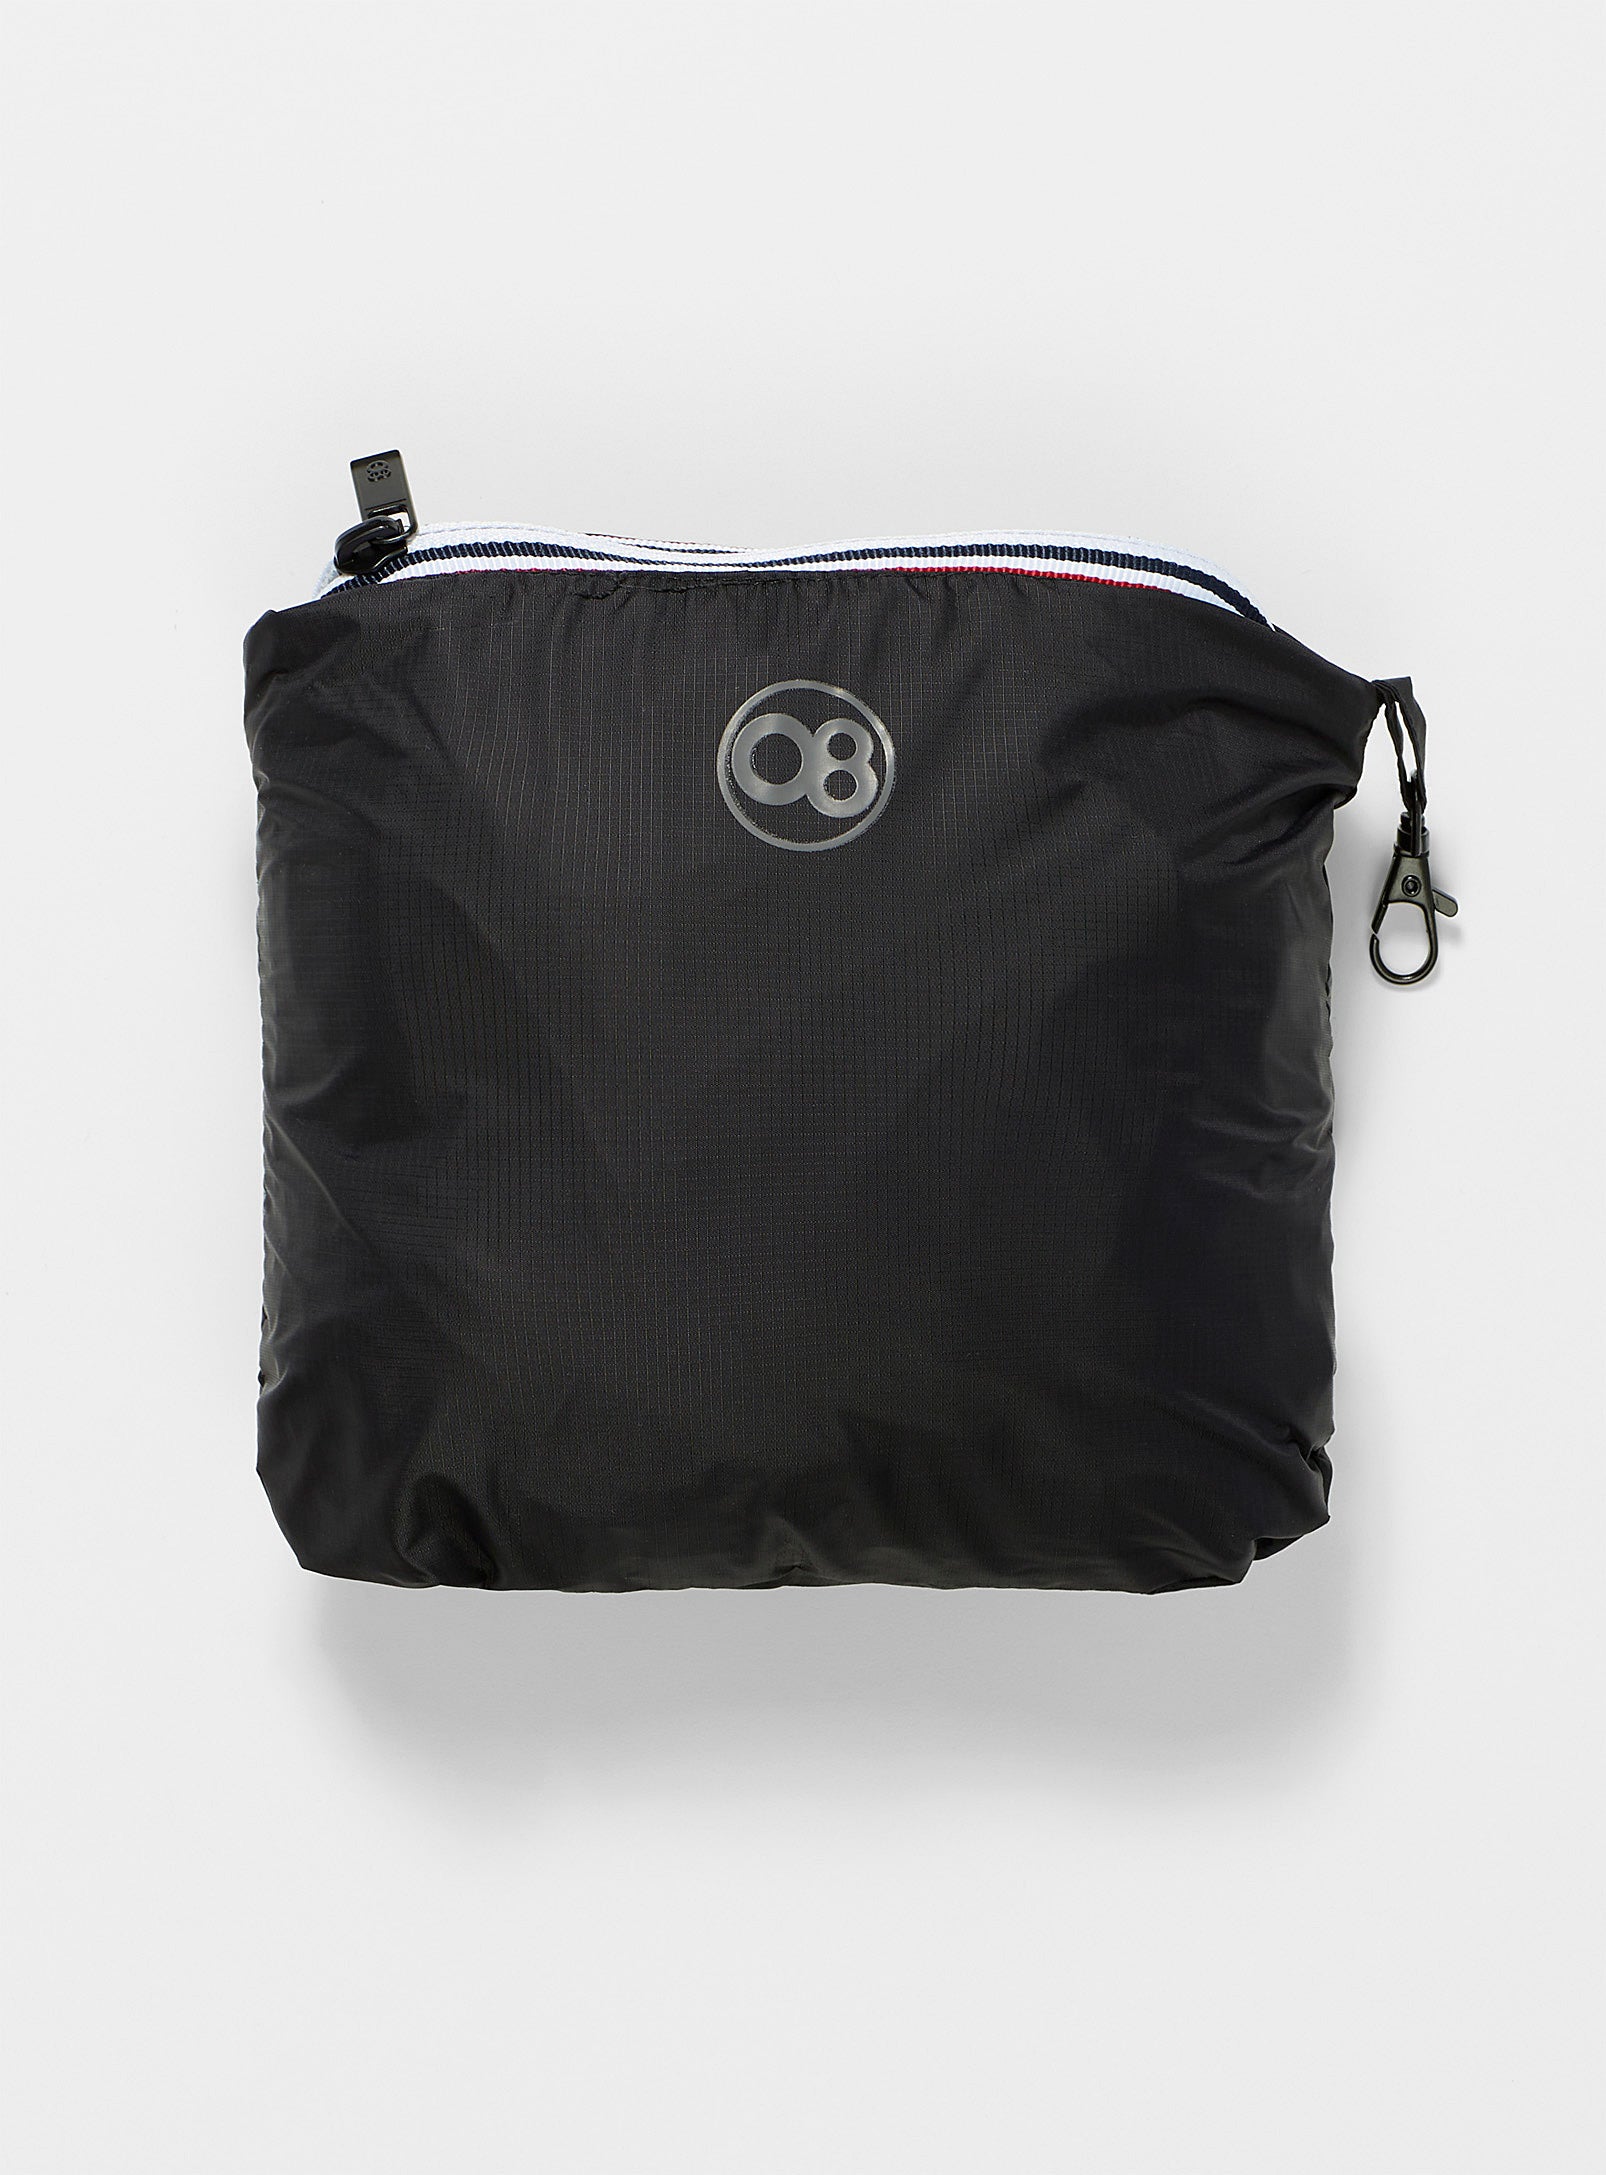 Sam Print - Kids Black Camo Full Zip Packable Rain Jacket - O8lifestyle